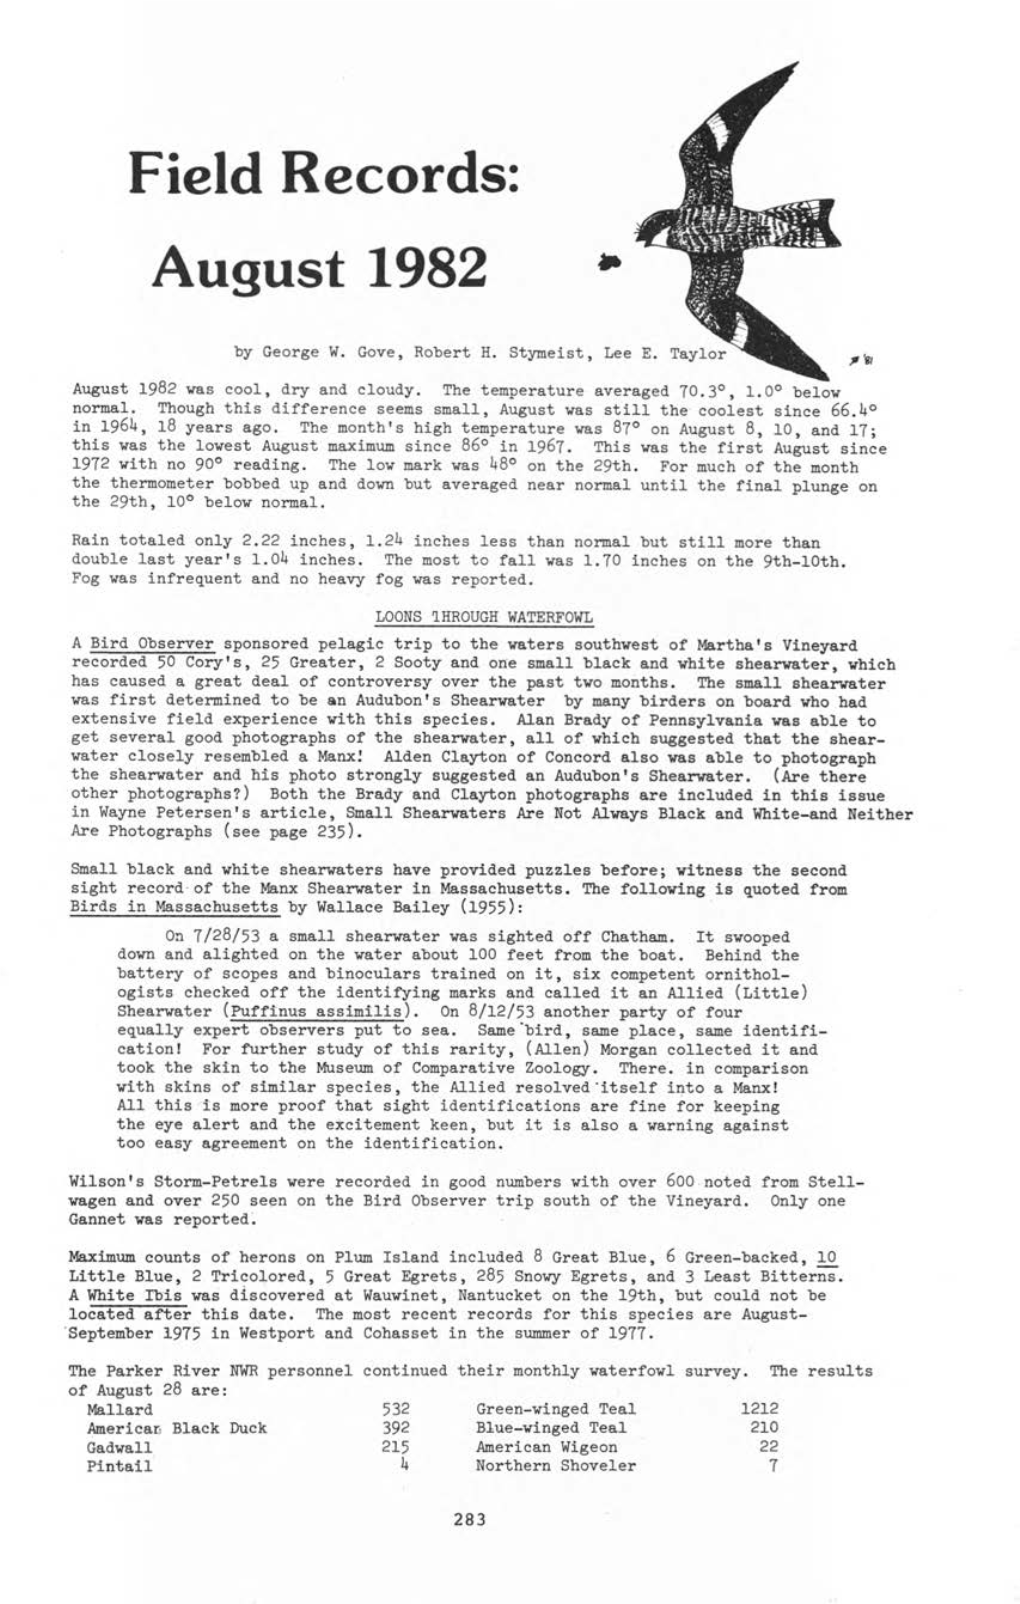 Birdobserver10.5 Page283-292 Field Records